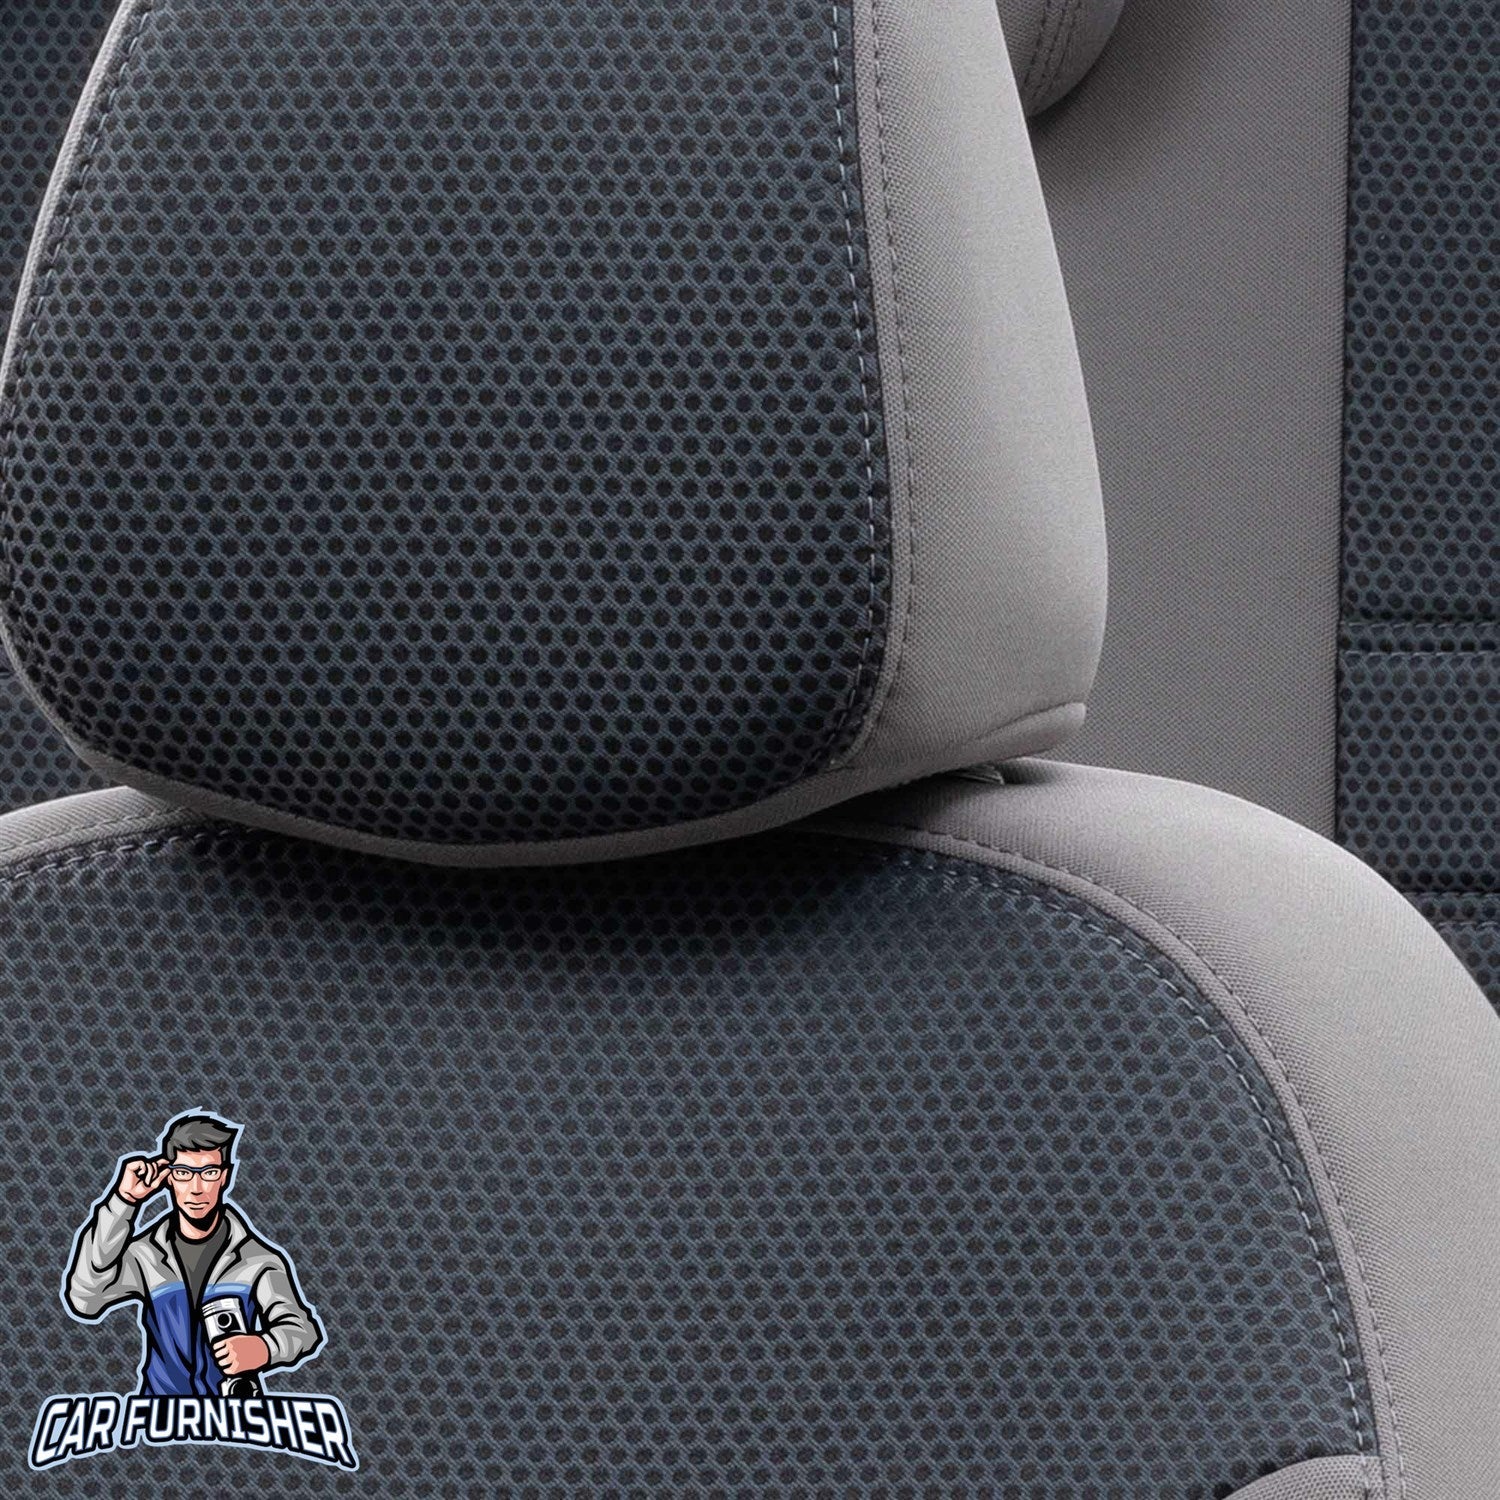 Kia Picanto Seat Covers Original Jacquard Design Smoked Jacquard Fabric